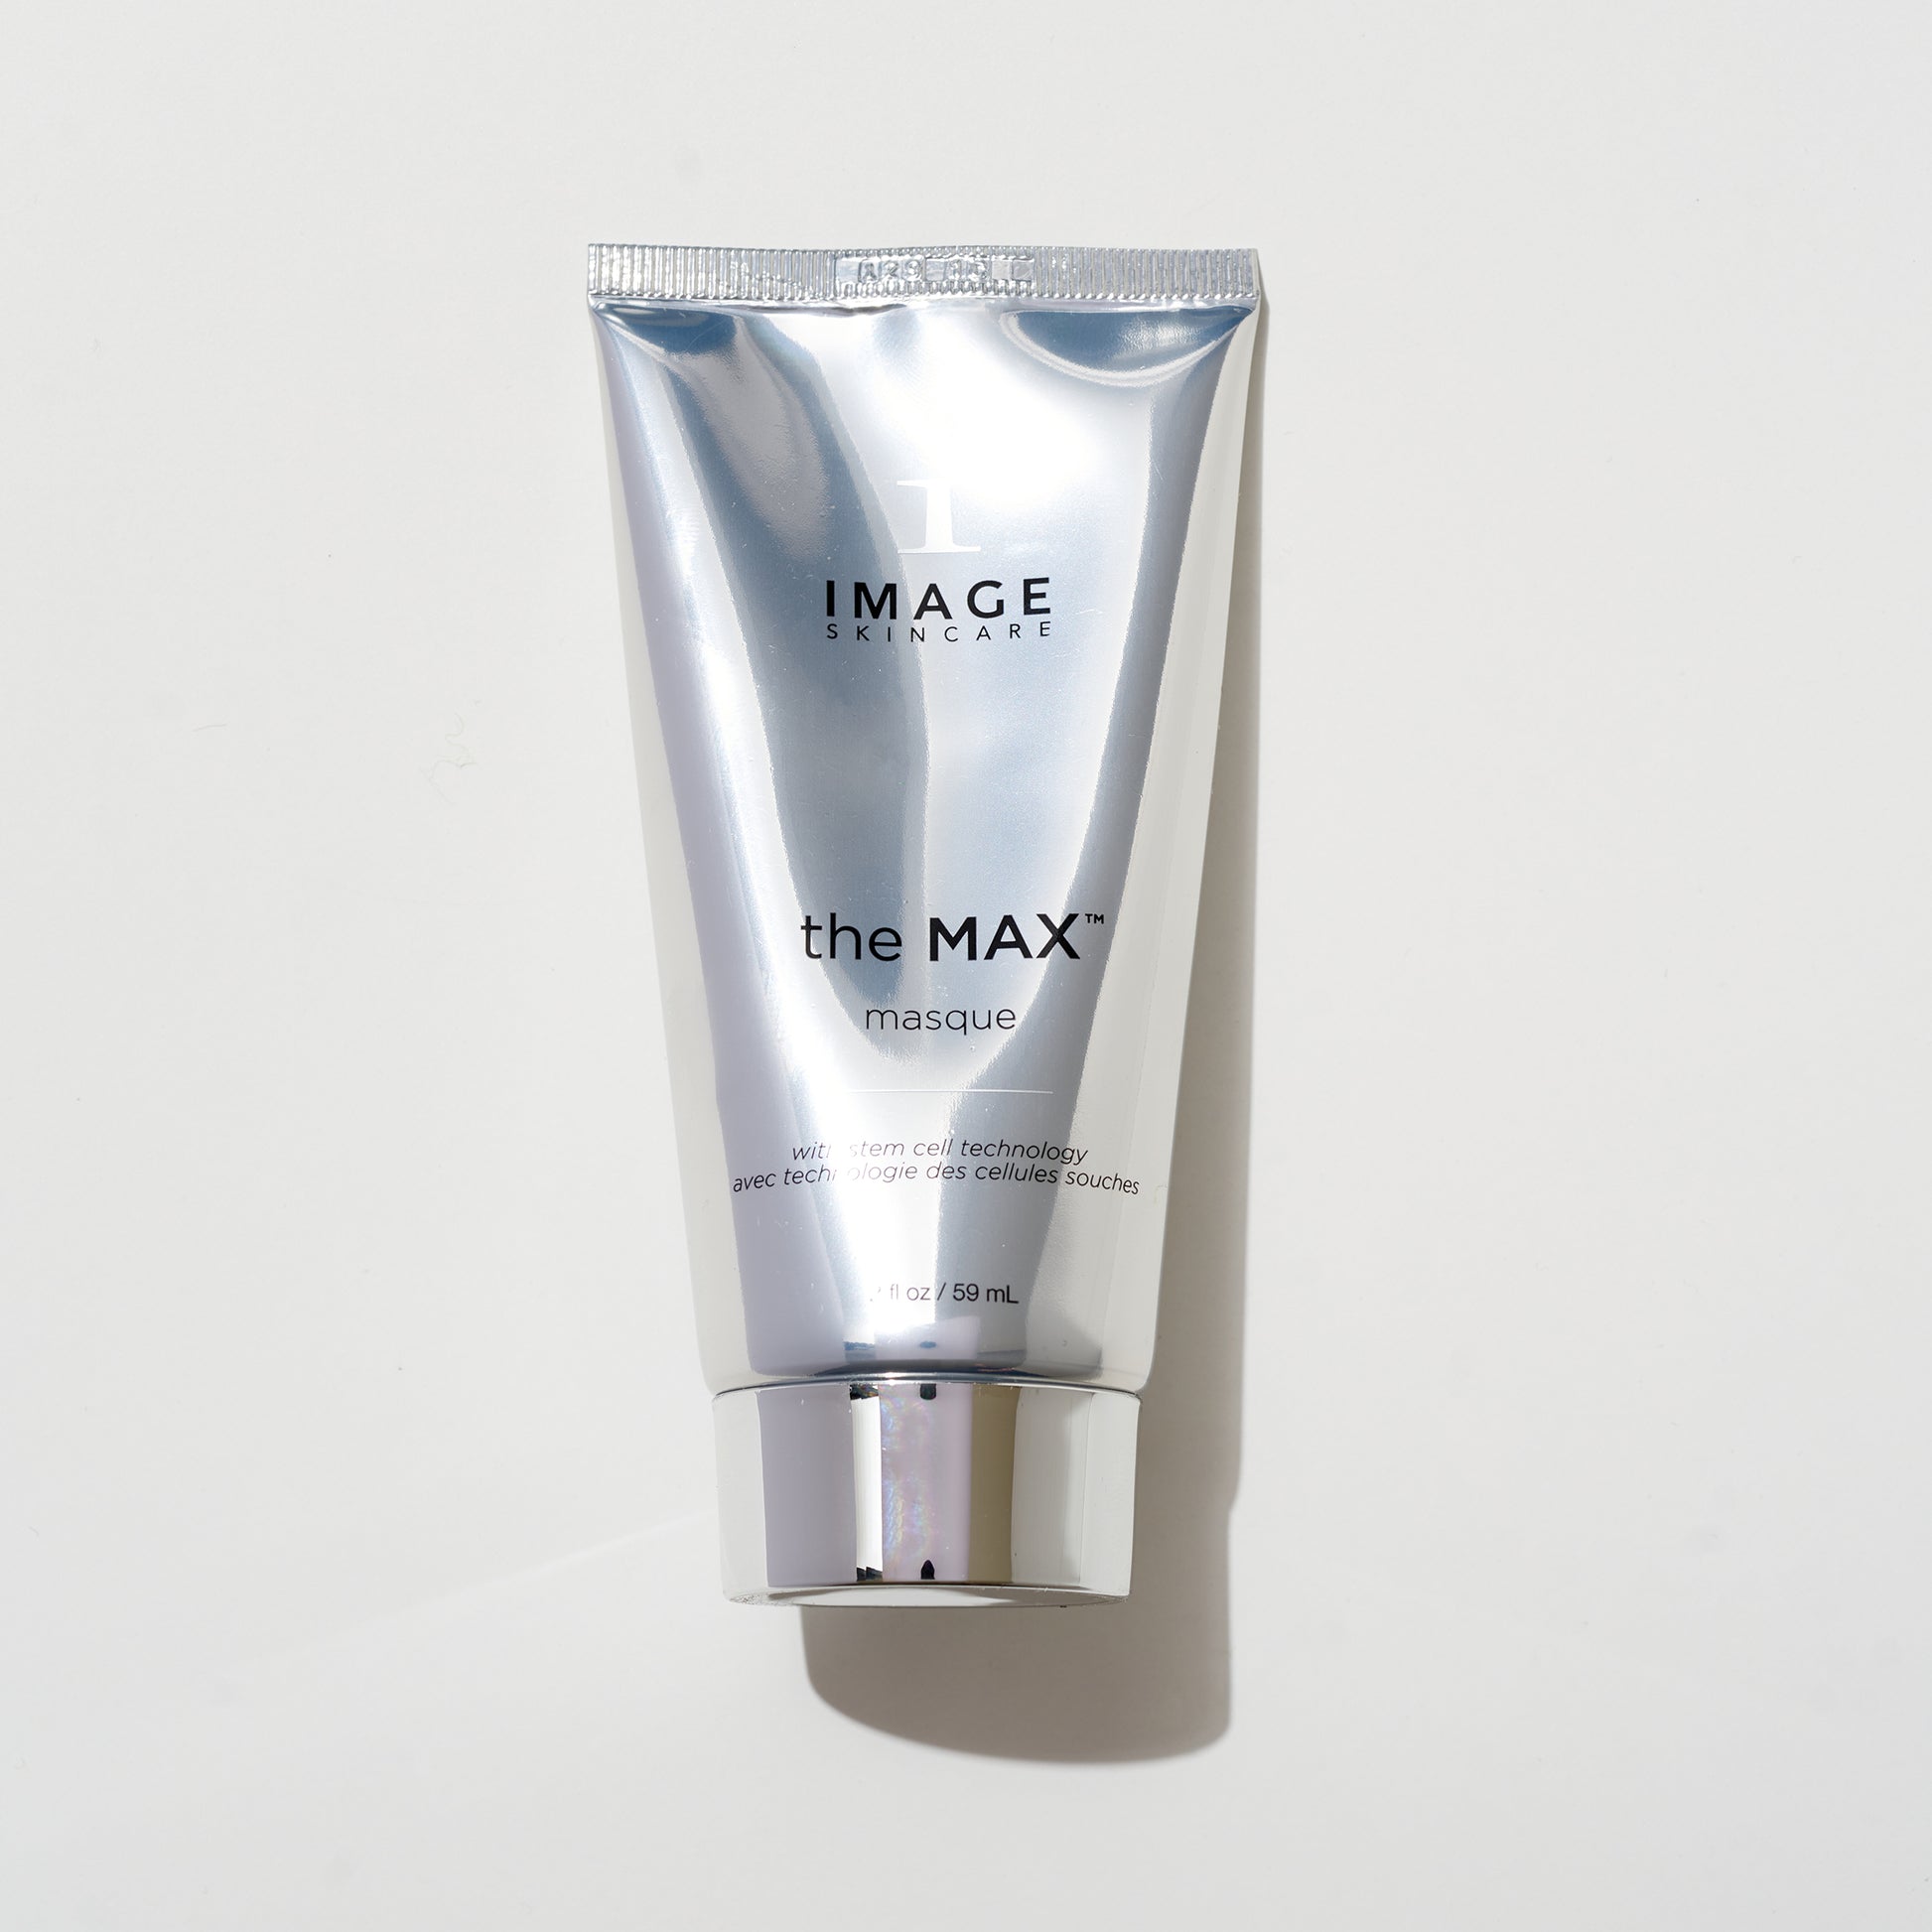 THE MAX Masque, Image Skincare